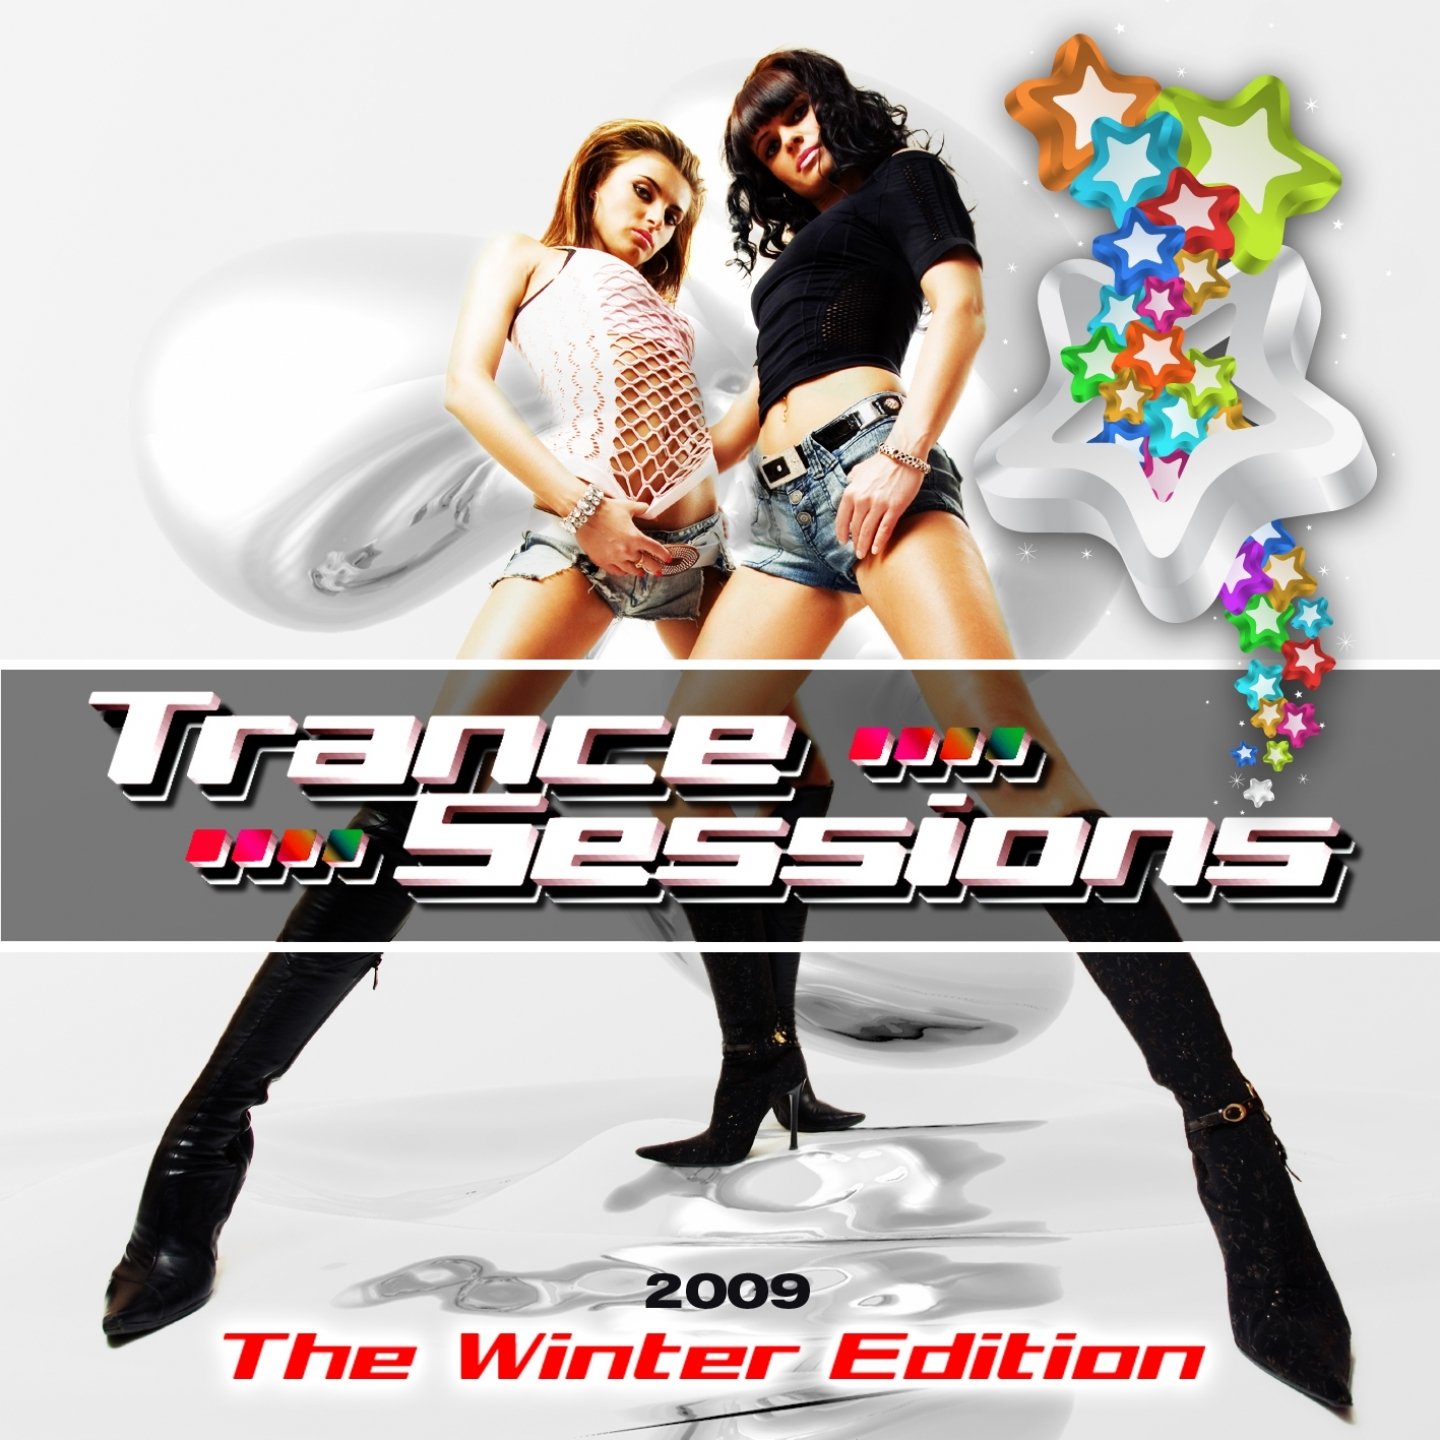 Мп3 новинки ремикс. A State of Trance обложки. Сборник музыка транс 2009. Trance session #3. Unmixed Progressive Trance 2001.